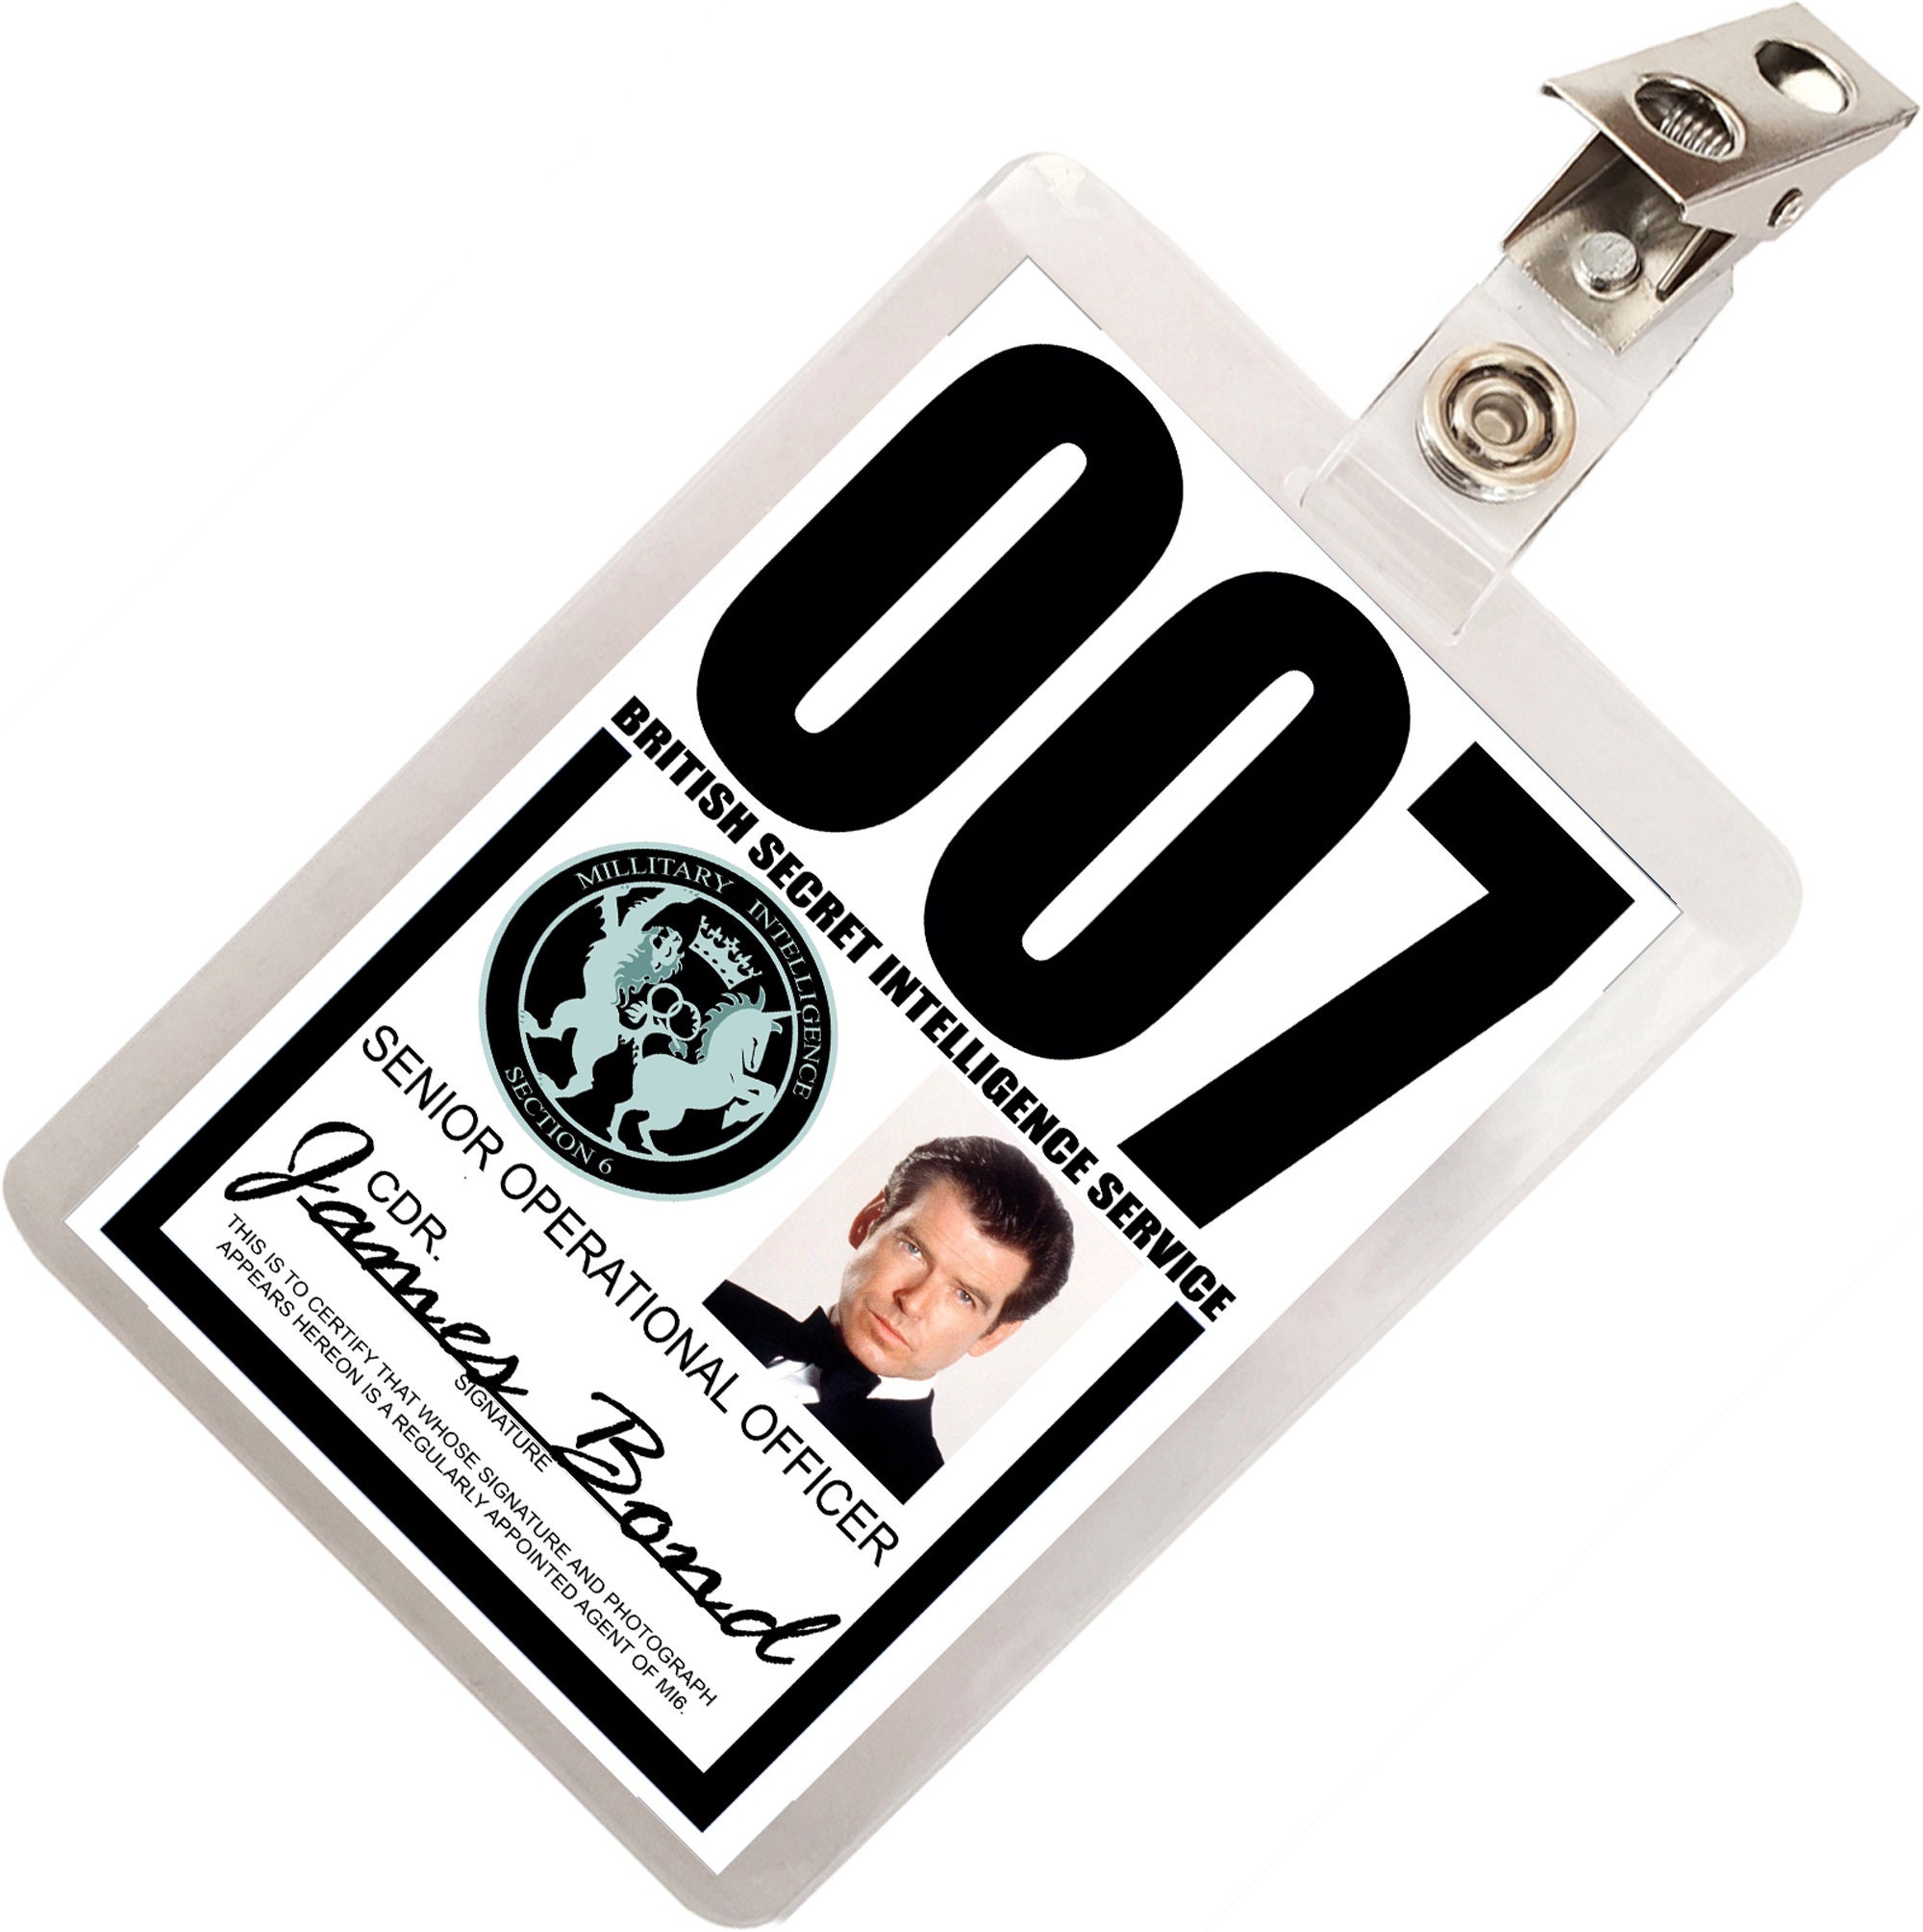 James Bond 23 MI23 / SIS British Secret Intelligence Service ID Badge Name  Tag Card Laminate Cosplay Prop With Mi6 Id Card Template